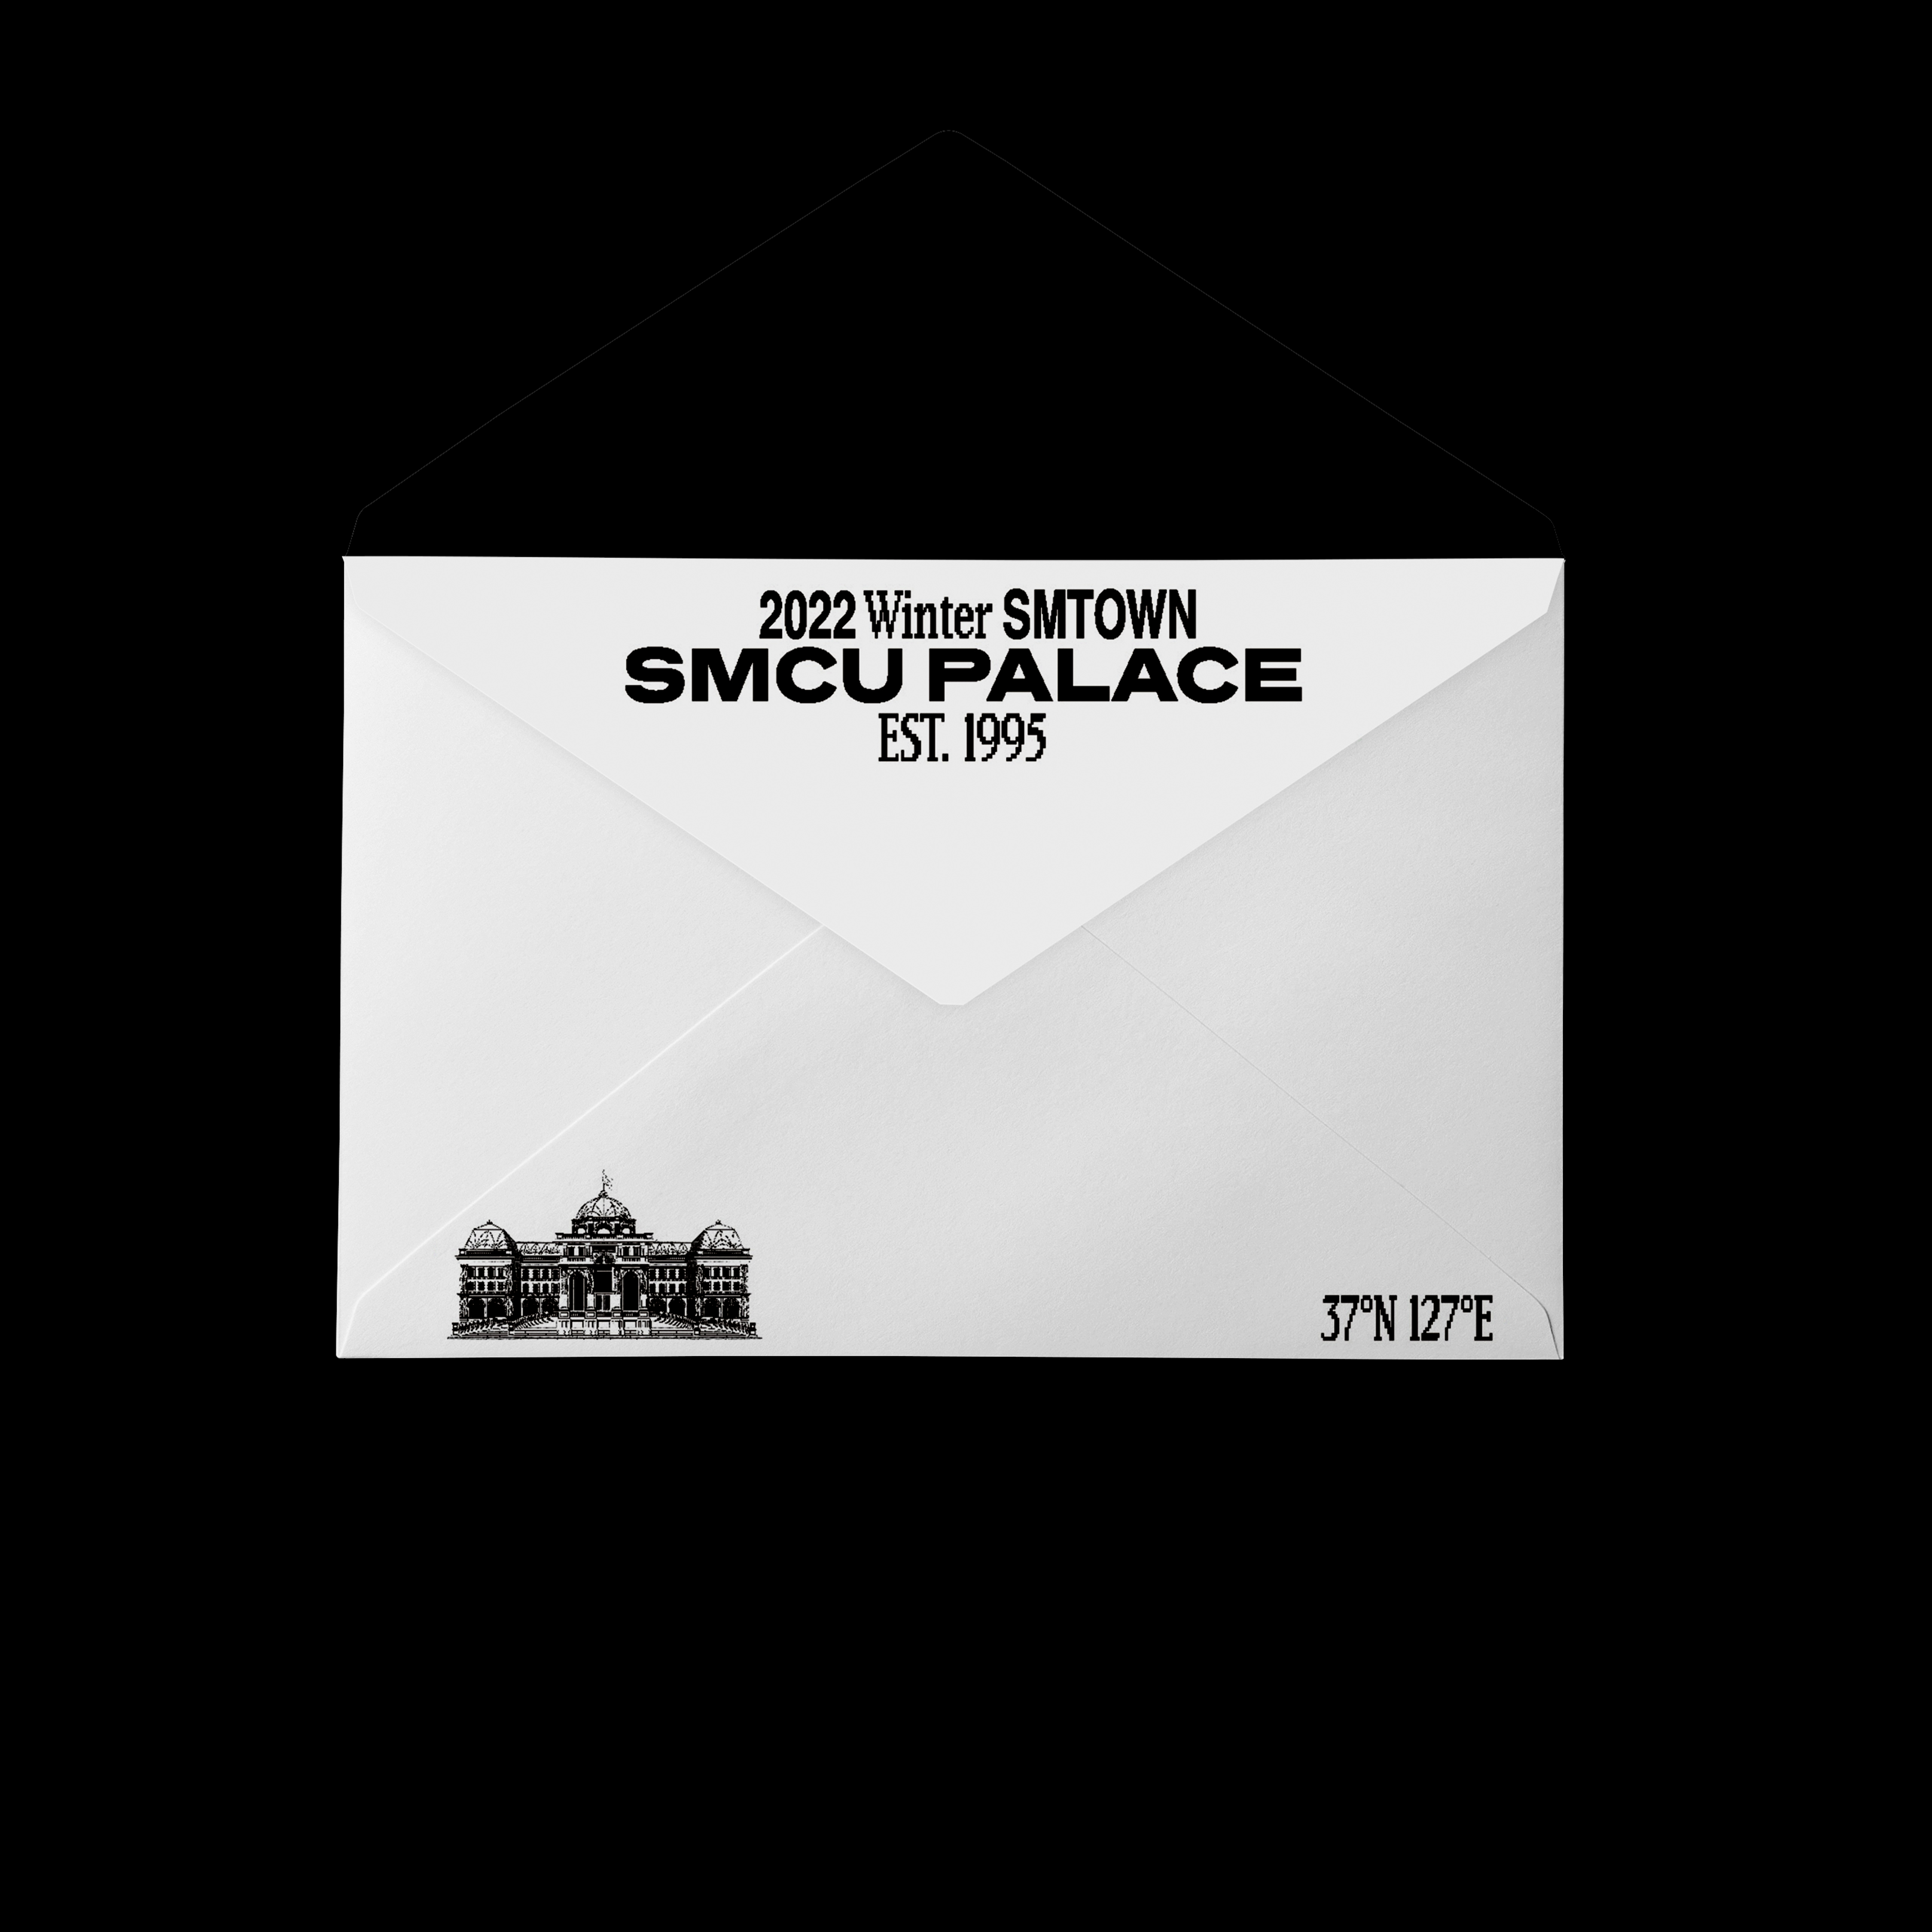 [全款 裸专] BoA - 2022 Winter SMTOWN : SMCU PALACE (GUEST. BoA) (Membership Card Ver.) _kpop散粉收容所